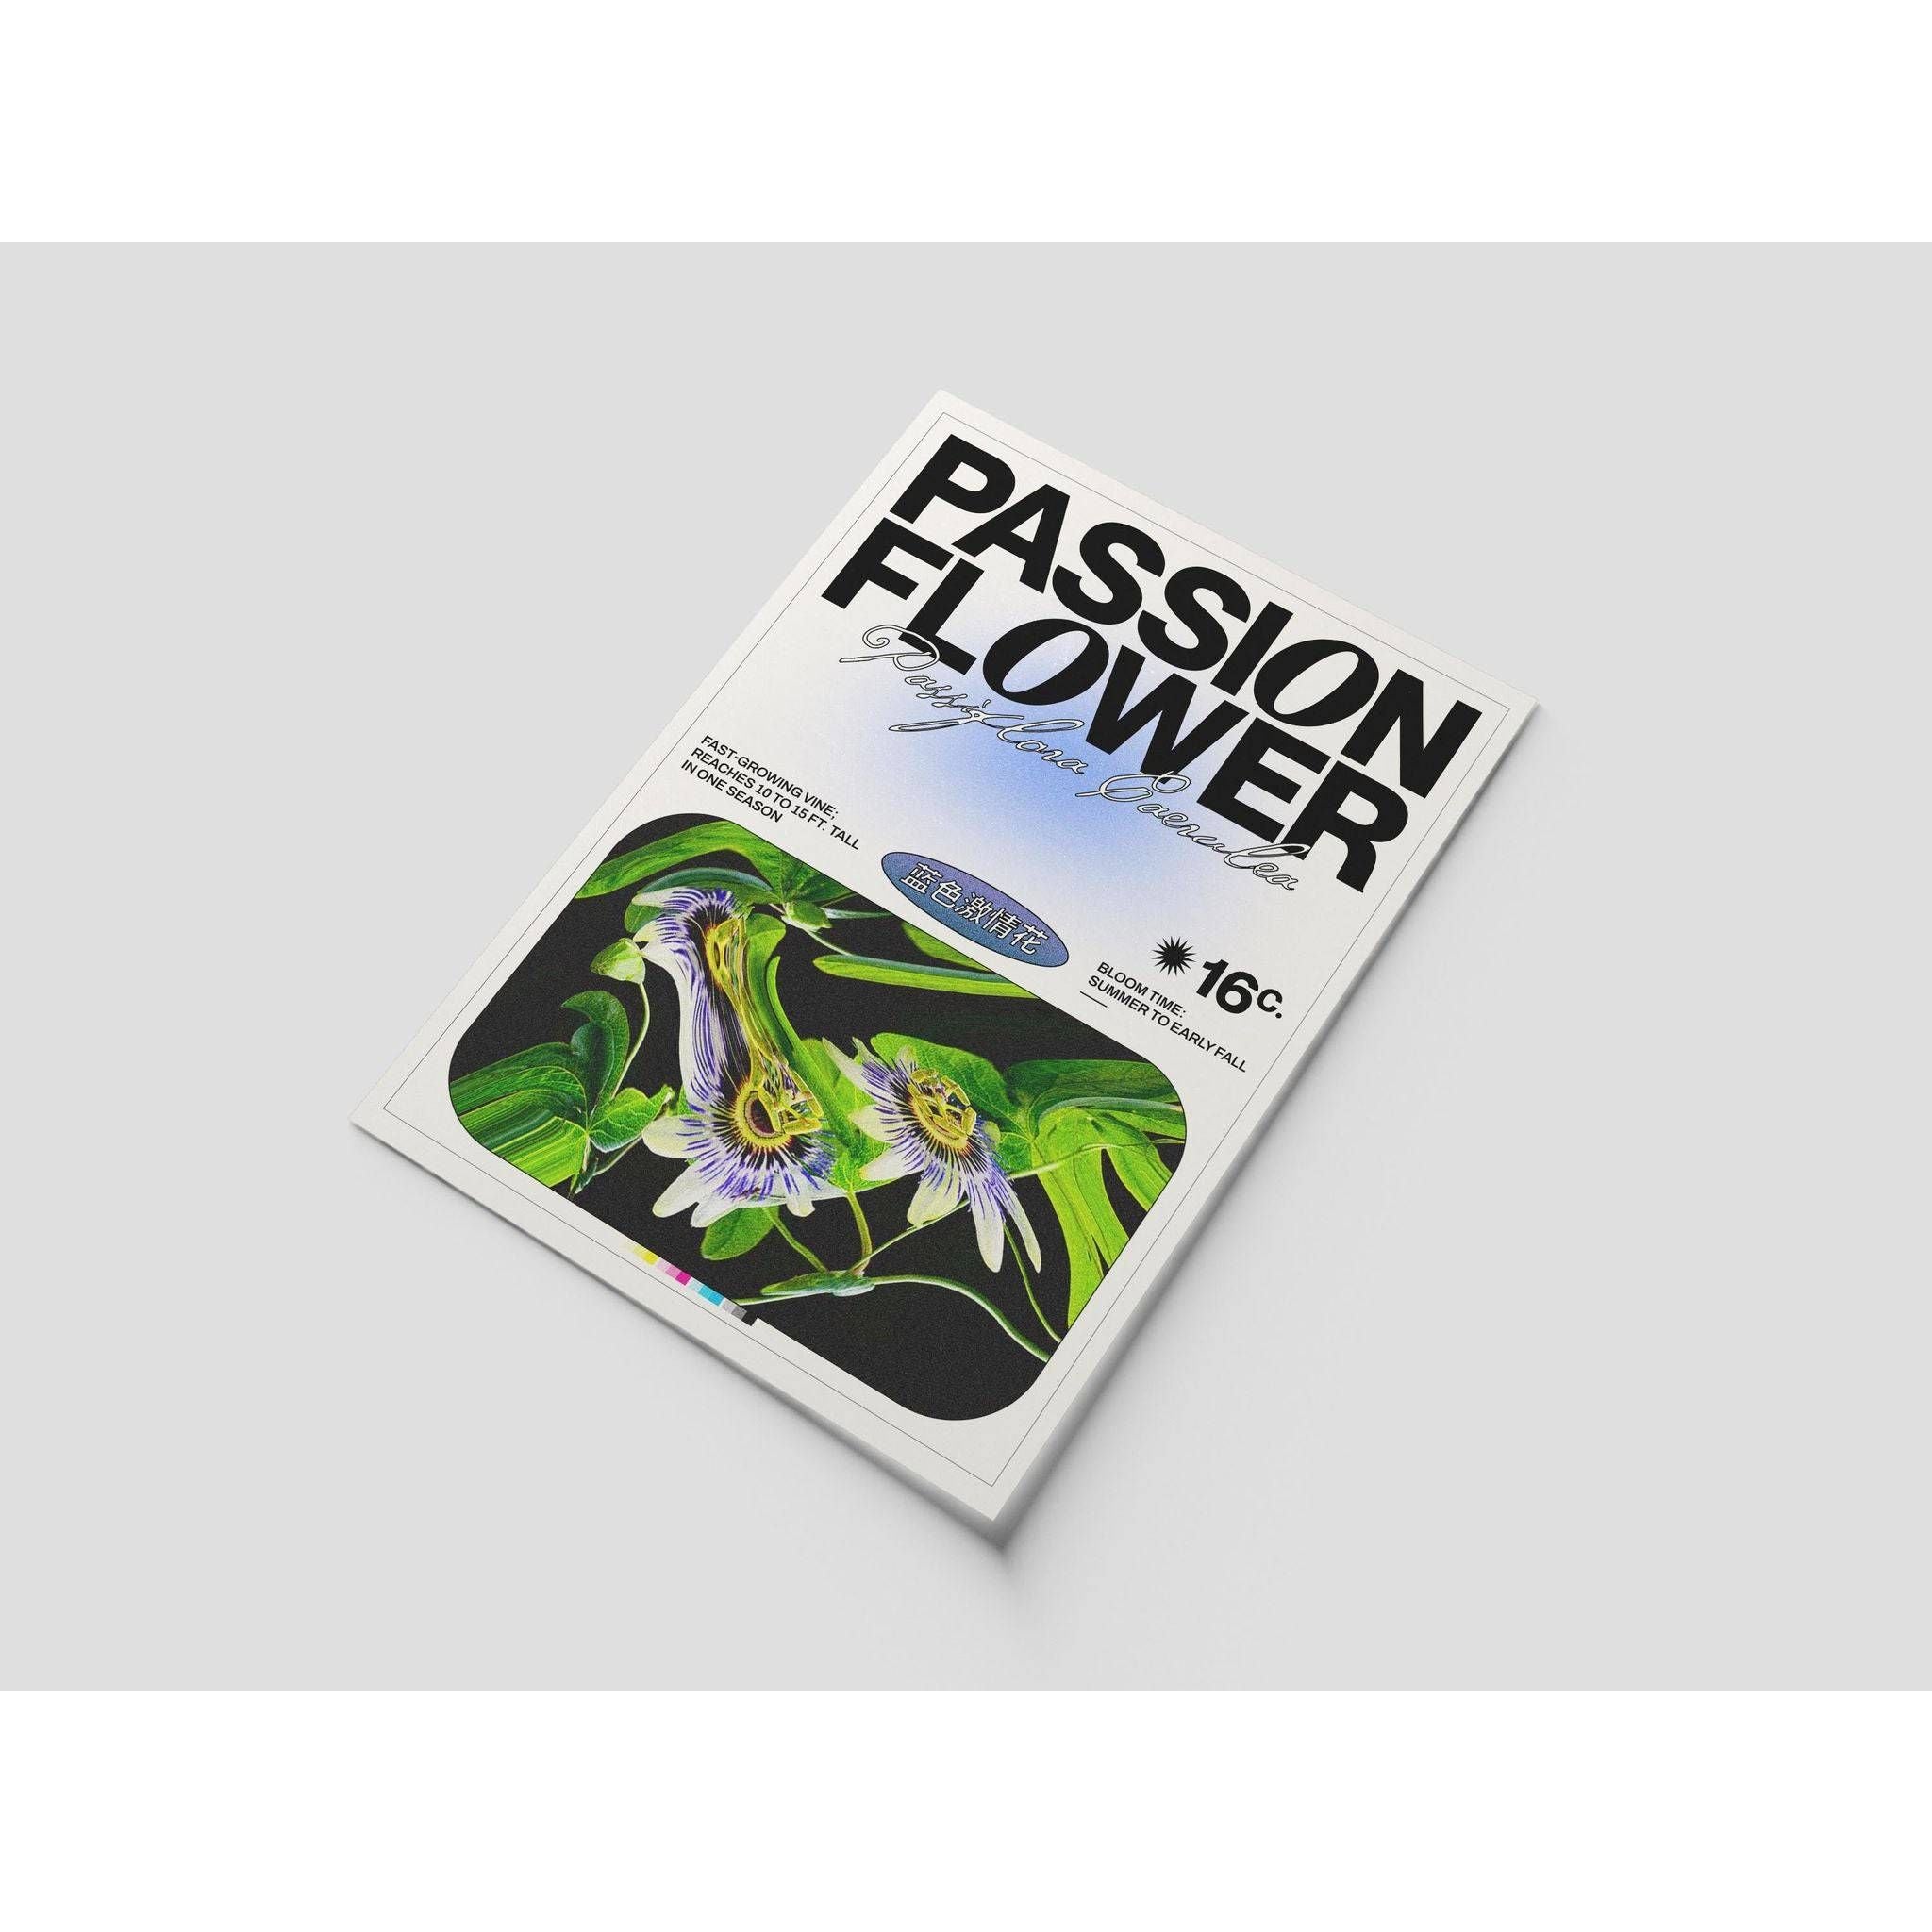 Passion Flower - Epi.to.me